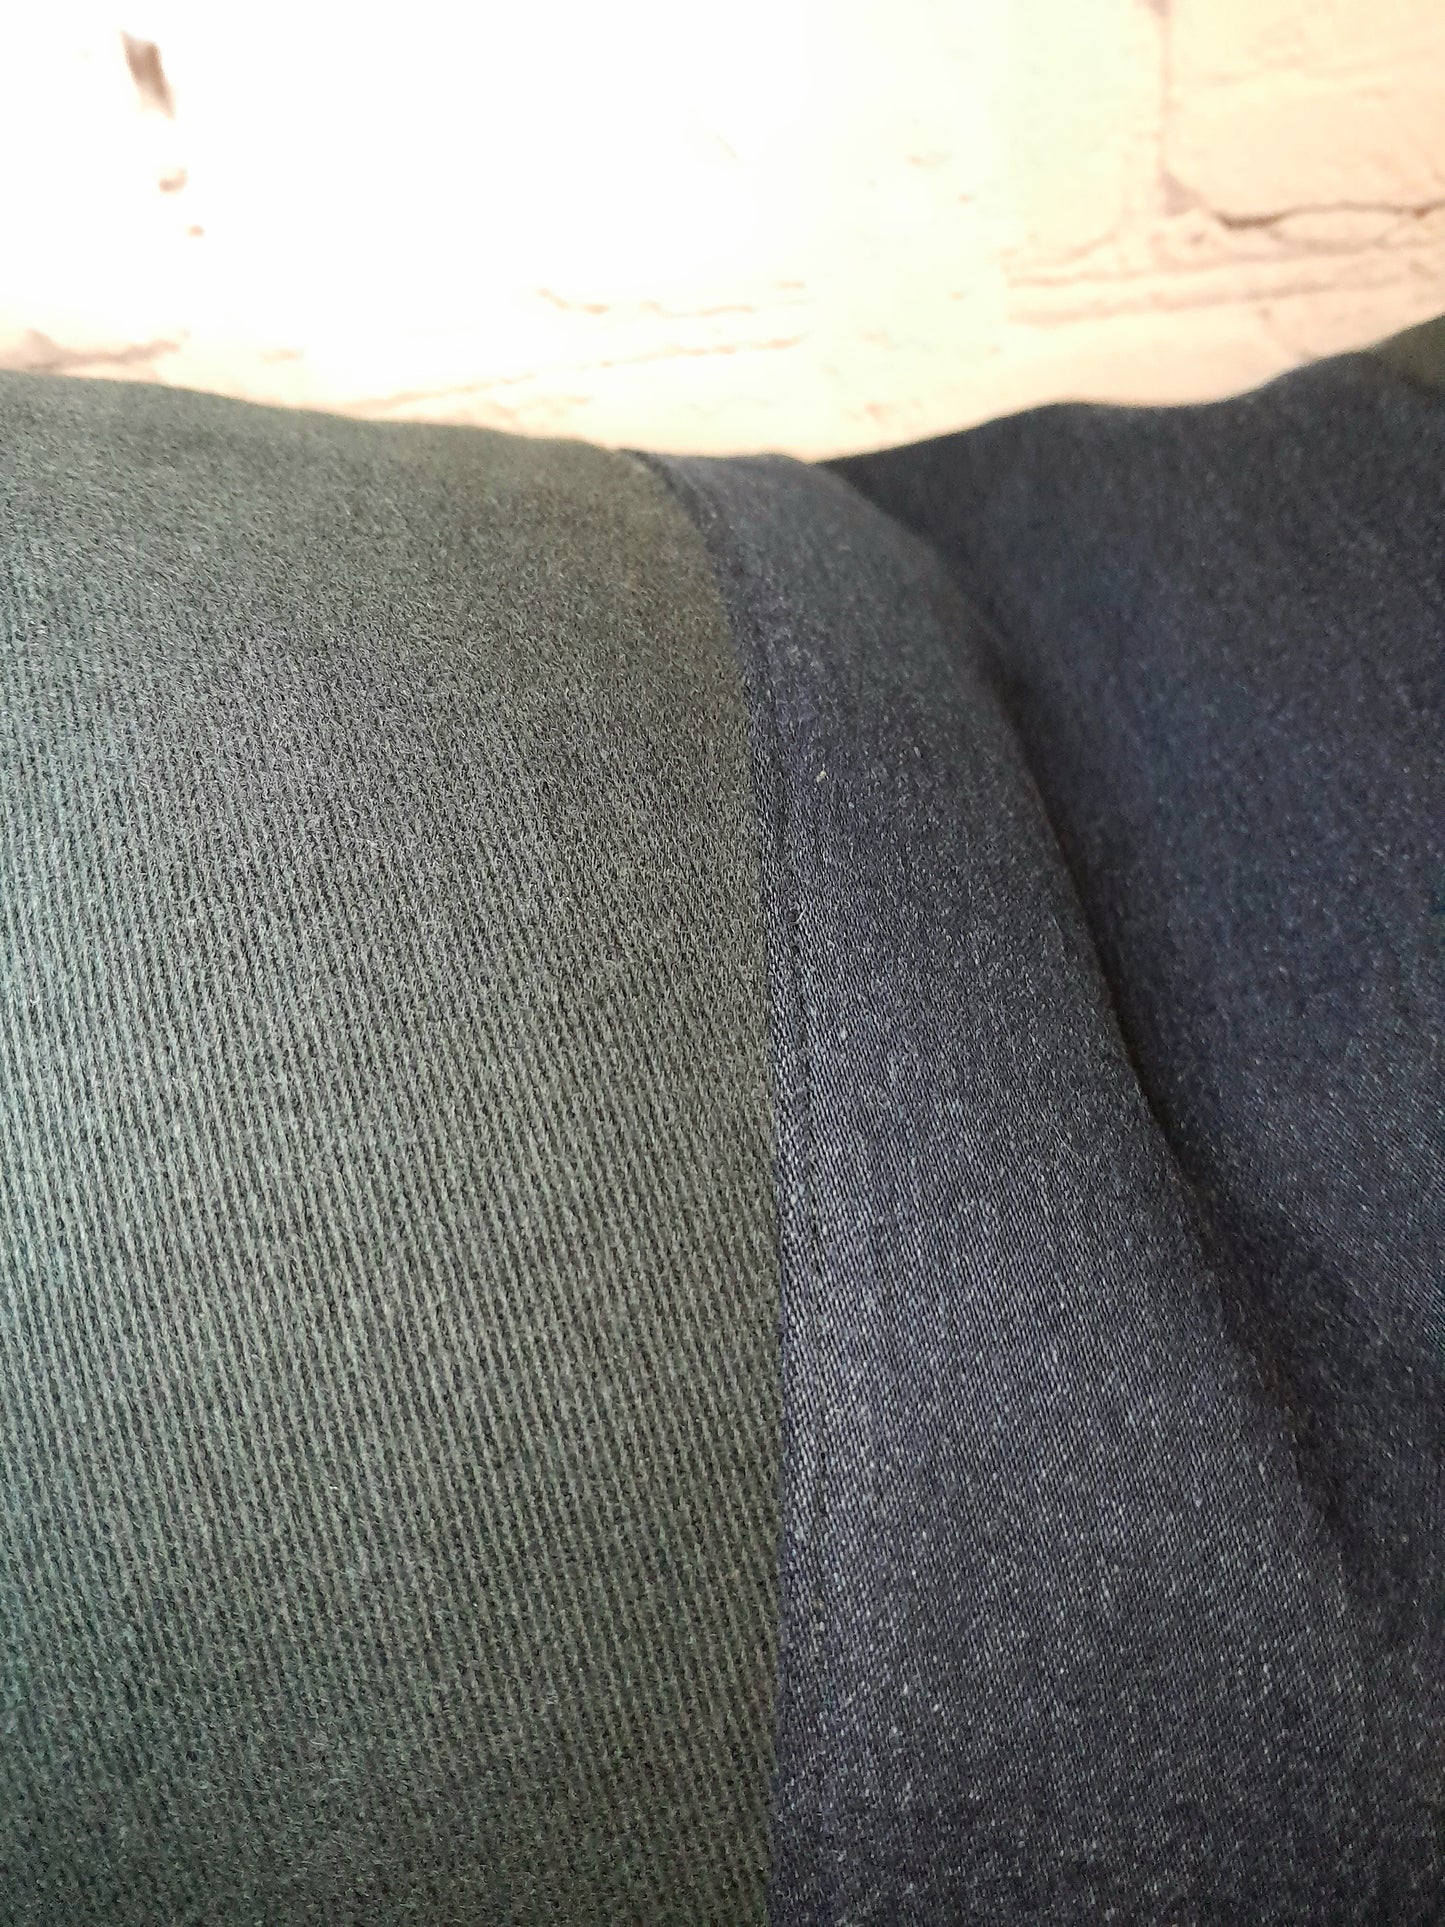 denim cushions old jeans